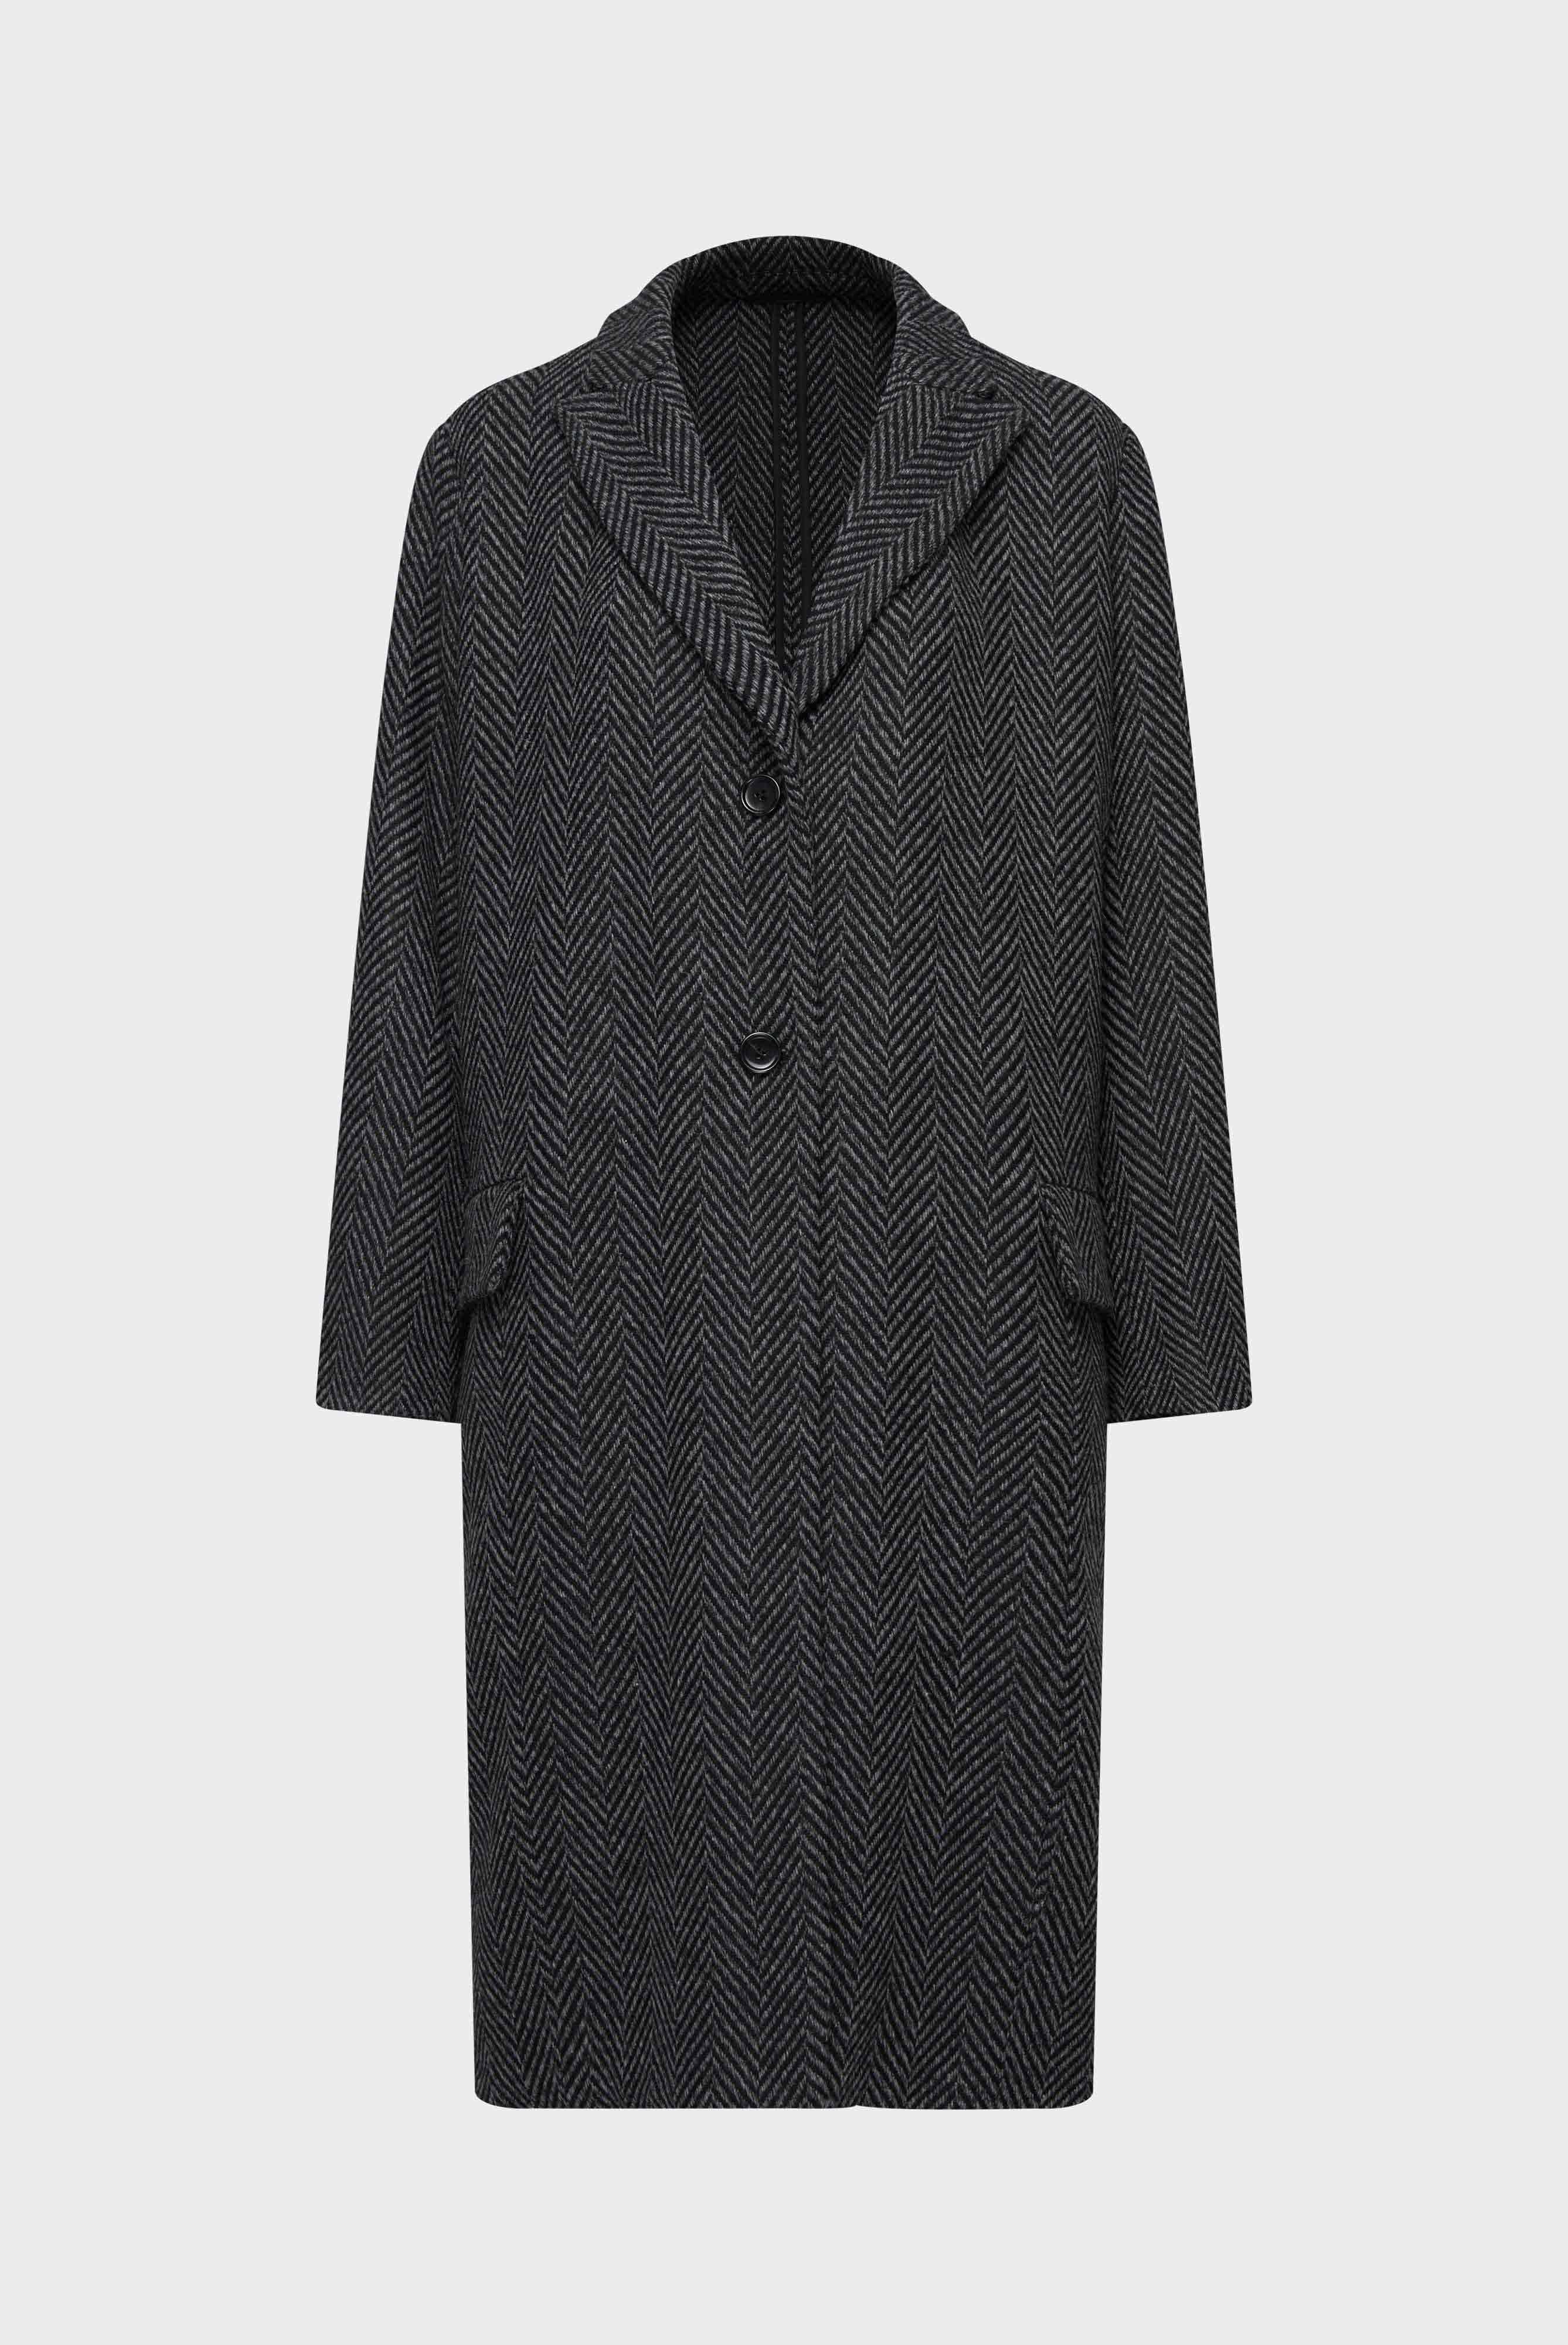 Coats+Coat with Herringbone pattern+05.652A..H01287.090.M